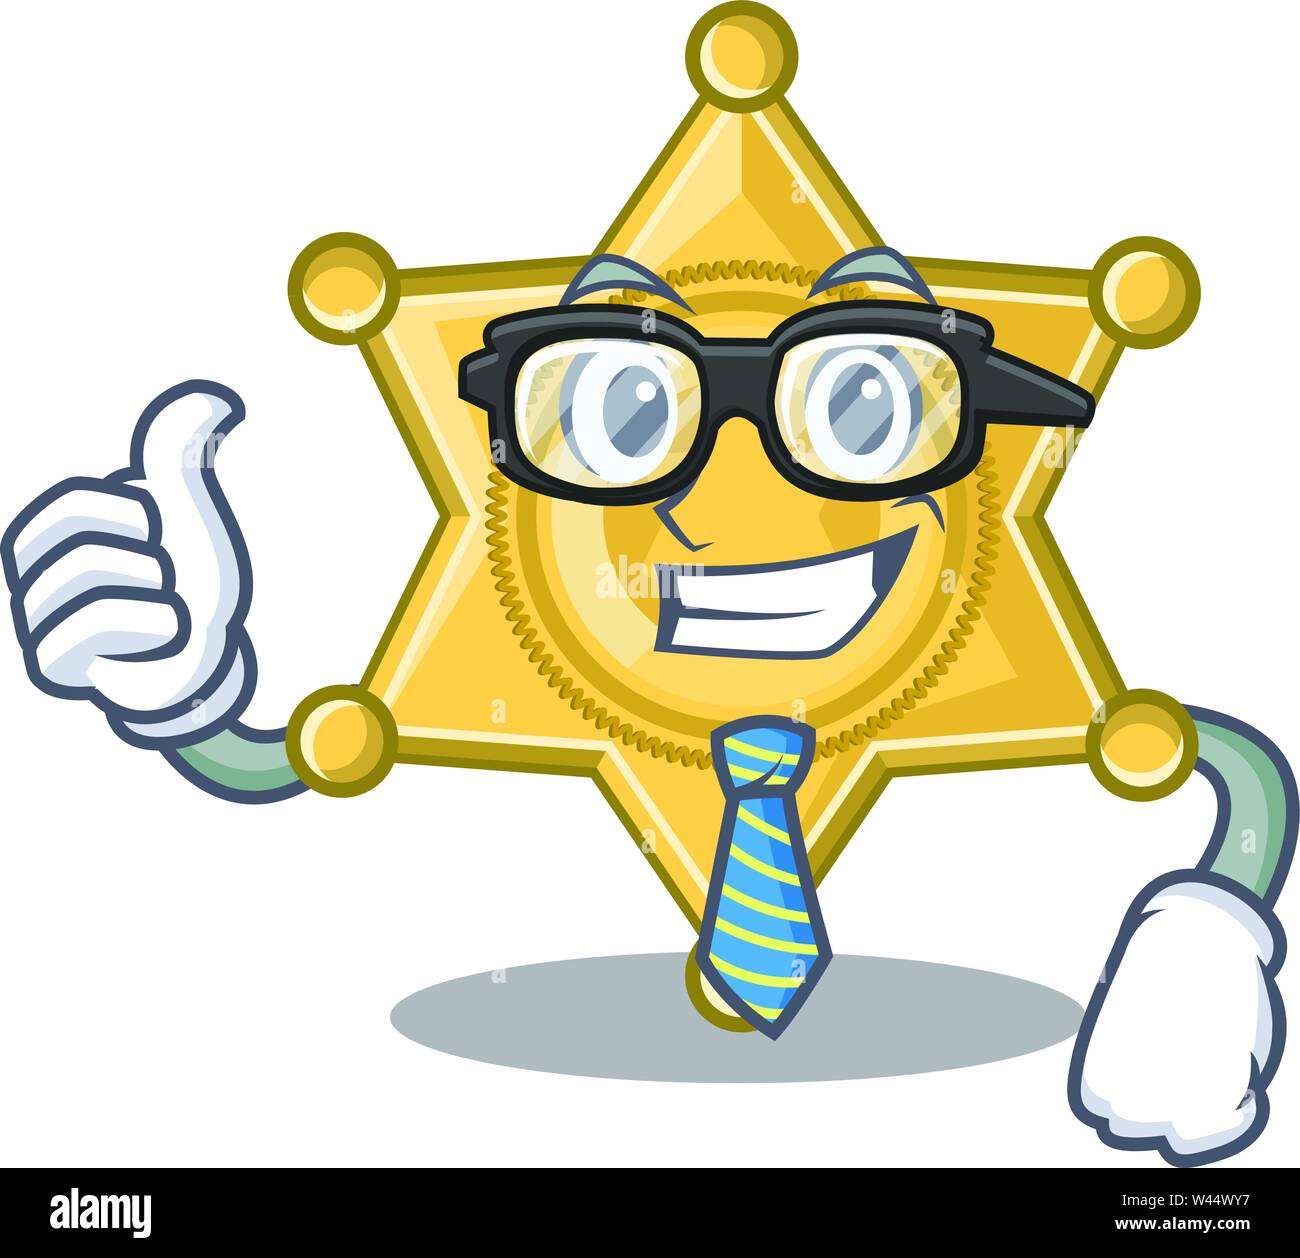 Businessman star badge police on a cartoon vector illustration Stock Vector